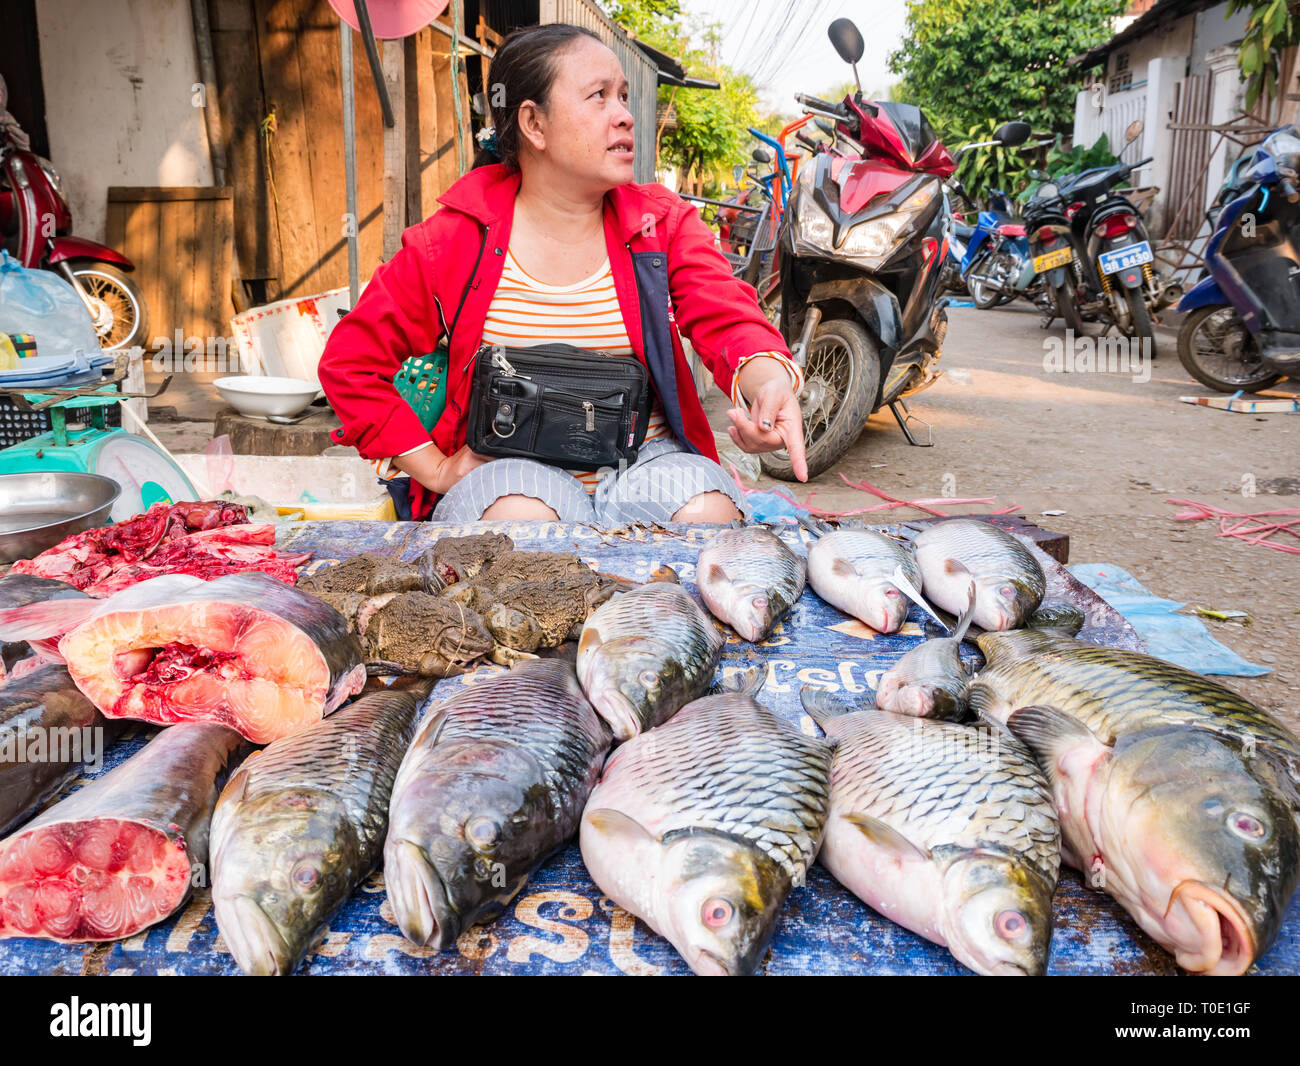 Woman selling fish and live toads at market stall, morning street food market, Luang Prabang, Laos, SE Asia Stock Photo